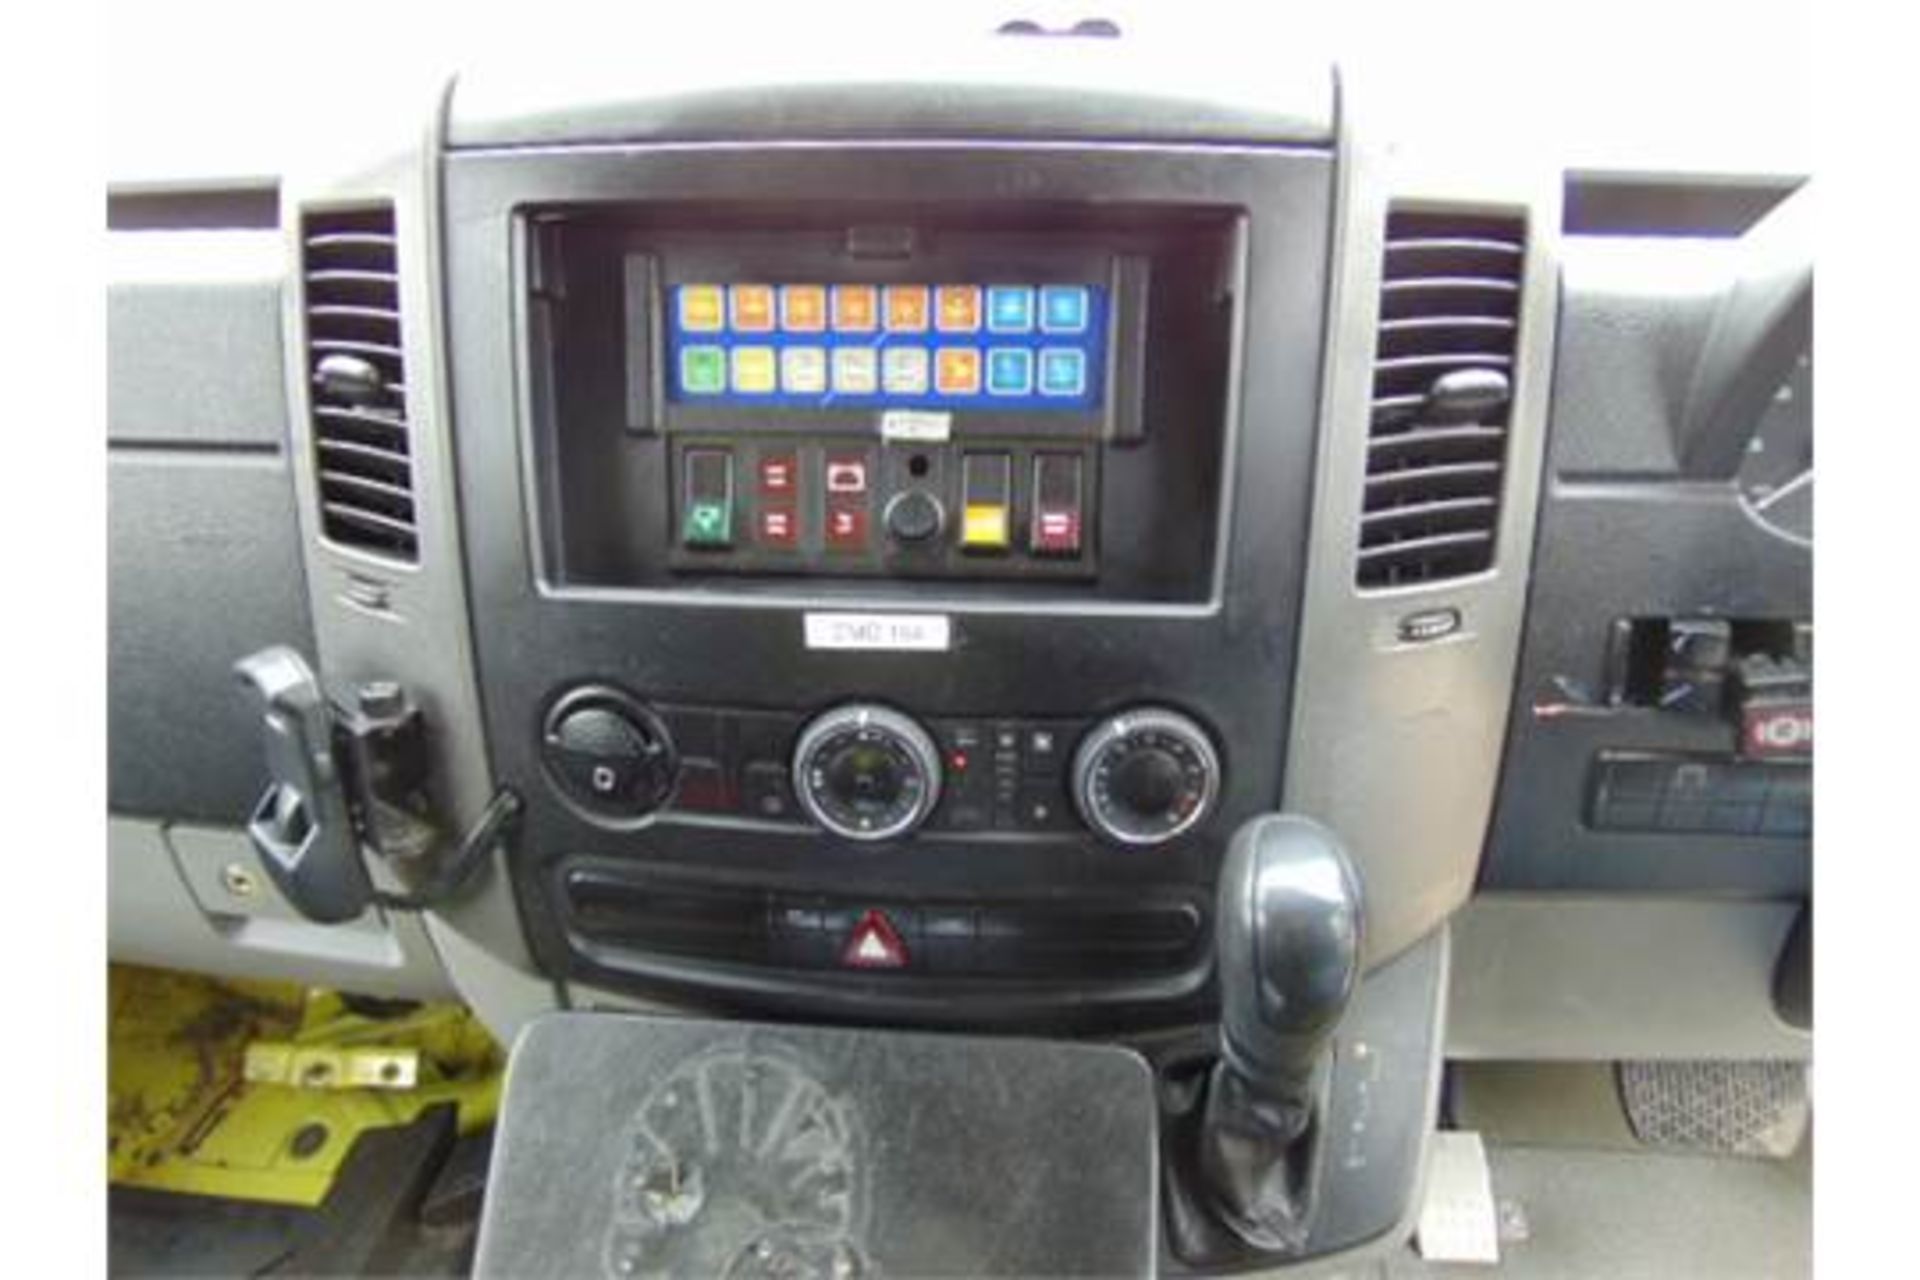 Mercedes Sprinter 515 CDI Turbo diesel ambulance - Image 18 of 21